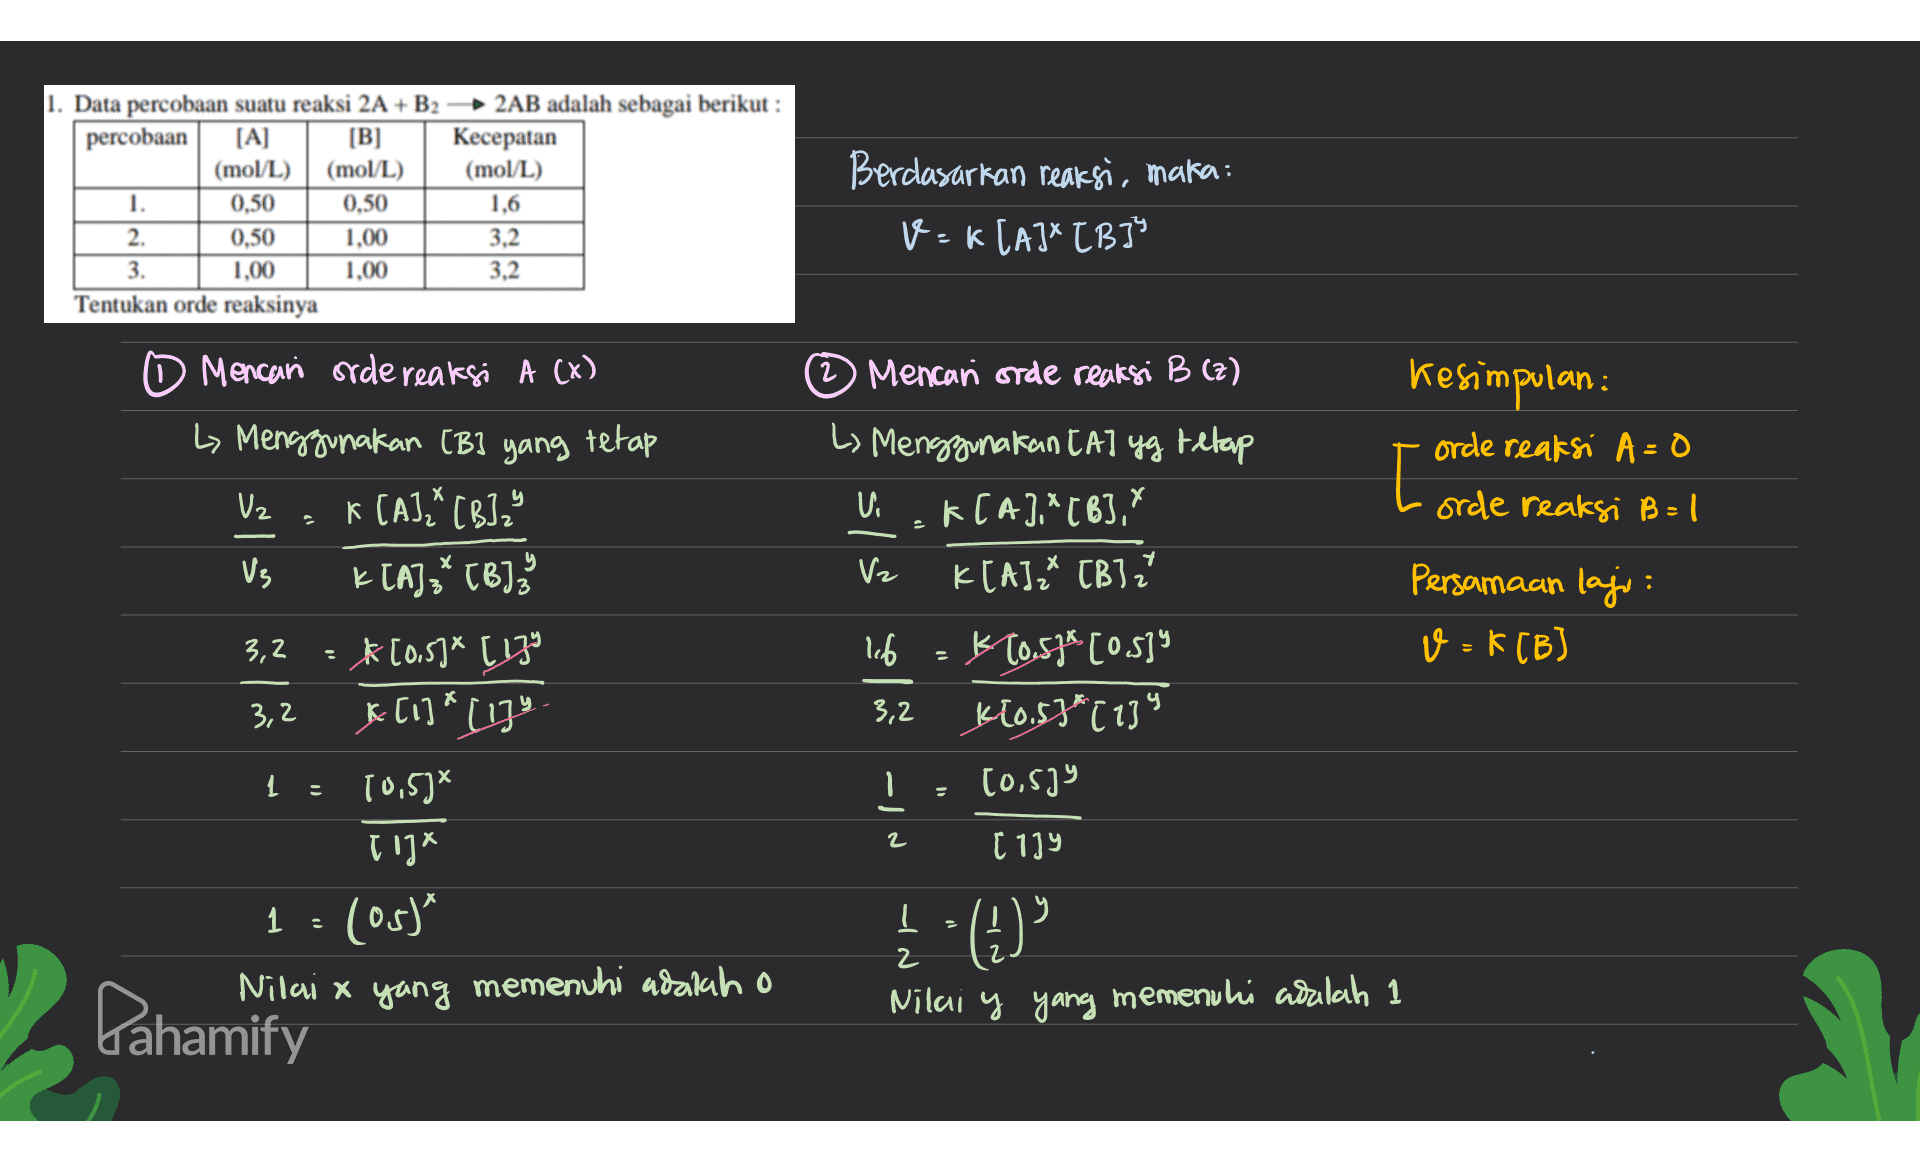 1. Data percobaan suatu reaksi 2A + B2 percobaan [A] [B] (mol/L) (mol/L) 1. 0,50 0,50 2. 0,50 1.00 3. 1.00 1.00 Tentukan orde reaksinya 2AB adalah sebagai berikut : Kecepatan (mol/L) 1,6 3.2 3.2 Berdasarkan reaksi, maka: V=CAJX TBBS 2 Mencan orde reaksi B (z) 0 Mencari orde reaksi A (x) L> Menggunakan (Bl yang tetap Uz K (AI,* [6]," Vs k [A]; TB] L> Menggunakan ta] yg tetap Vi KCA).*[b],? Vz KLAJ, TBJP Kesimpulan: orde reaksi A=0 I orde reaksi B = 1 Persamaan lagi: v = K[B] 3,2 = K[0.5]* (17! 3,2 k Ci]* UPS . 1 : 10.53% [1]* 1 = (os)" Nilai x yang memenuhi adalah 2 lebo = K [ klo.sk [05]" 3,2 Kło.5*( 13" 1 [0.53 [1]9 Į y - (4) 2 Nilai y yang memenuhi adalah 1 Dahamify 